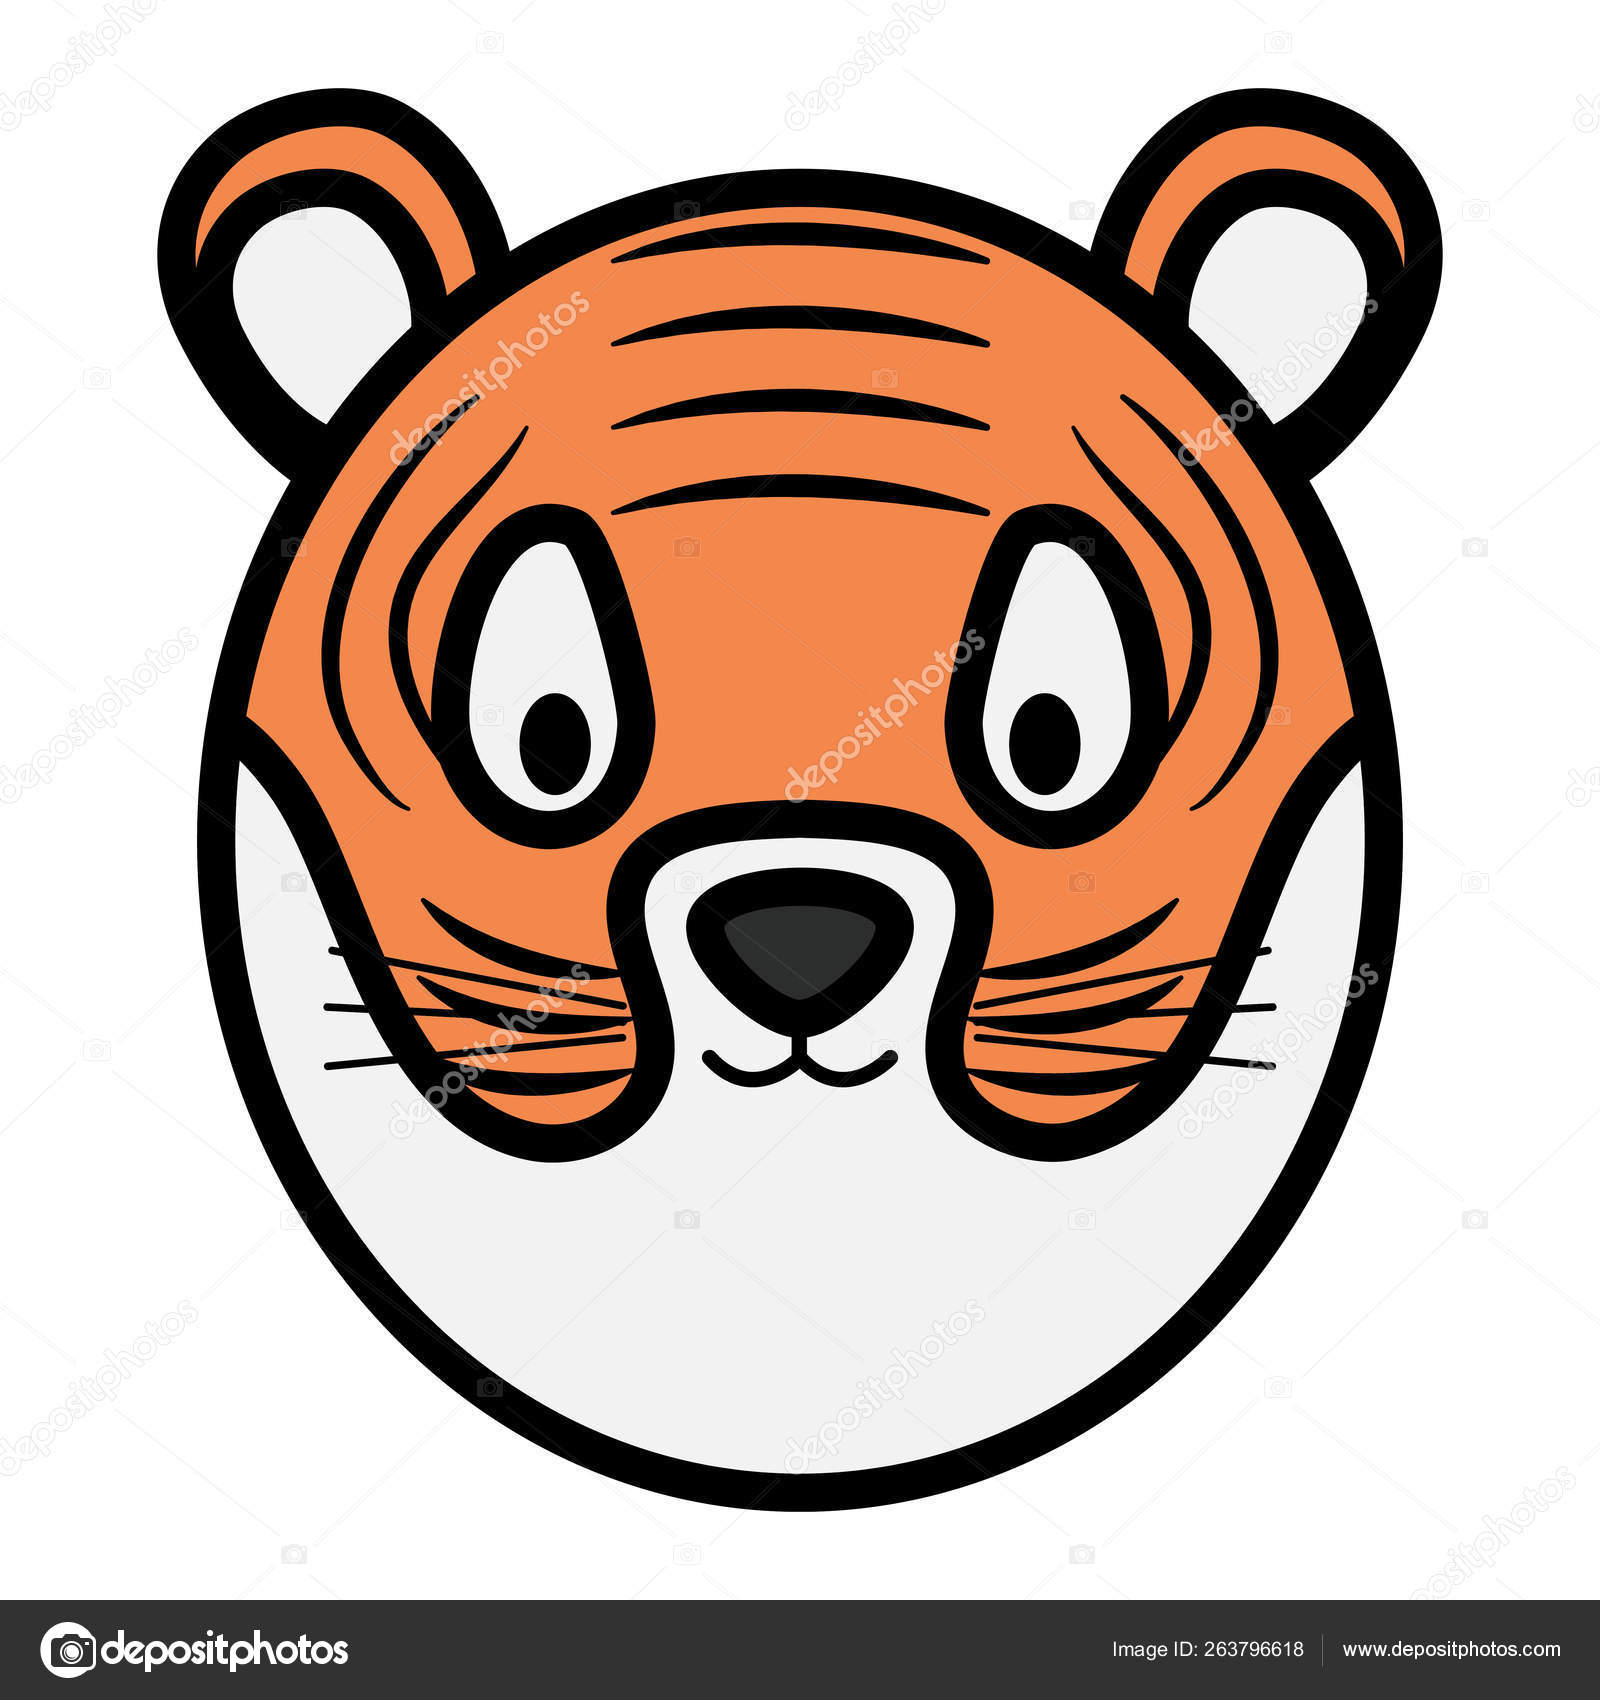 https://st4.depositphotos.com/11953928/26379/v/1600/depositphotos_263796618-stock-illustration-cute-tiger-head-childish-character.jpg